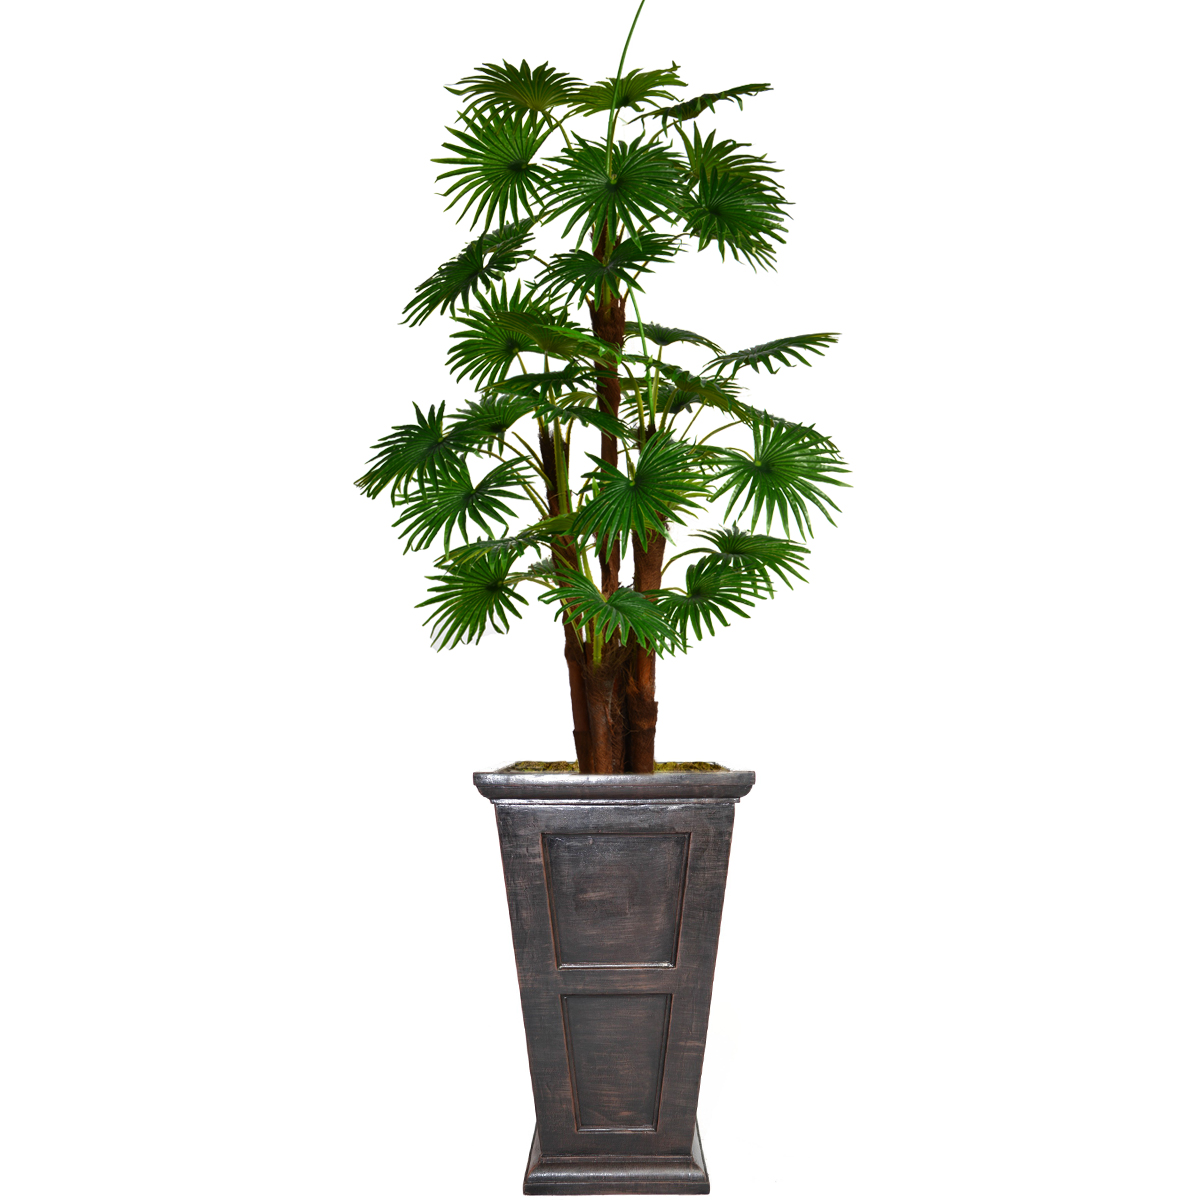 Vhx129201 84.8 In. Tall Fan Palm Tree, Burlap Kit & Fiberstone Planter